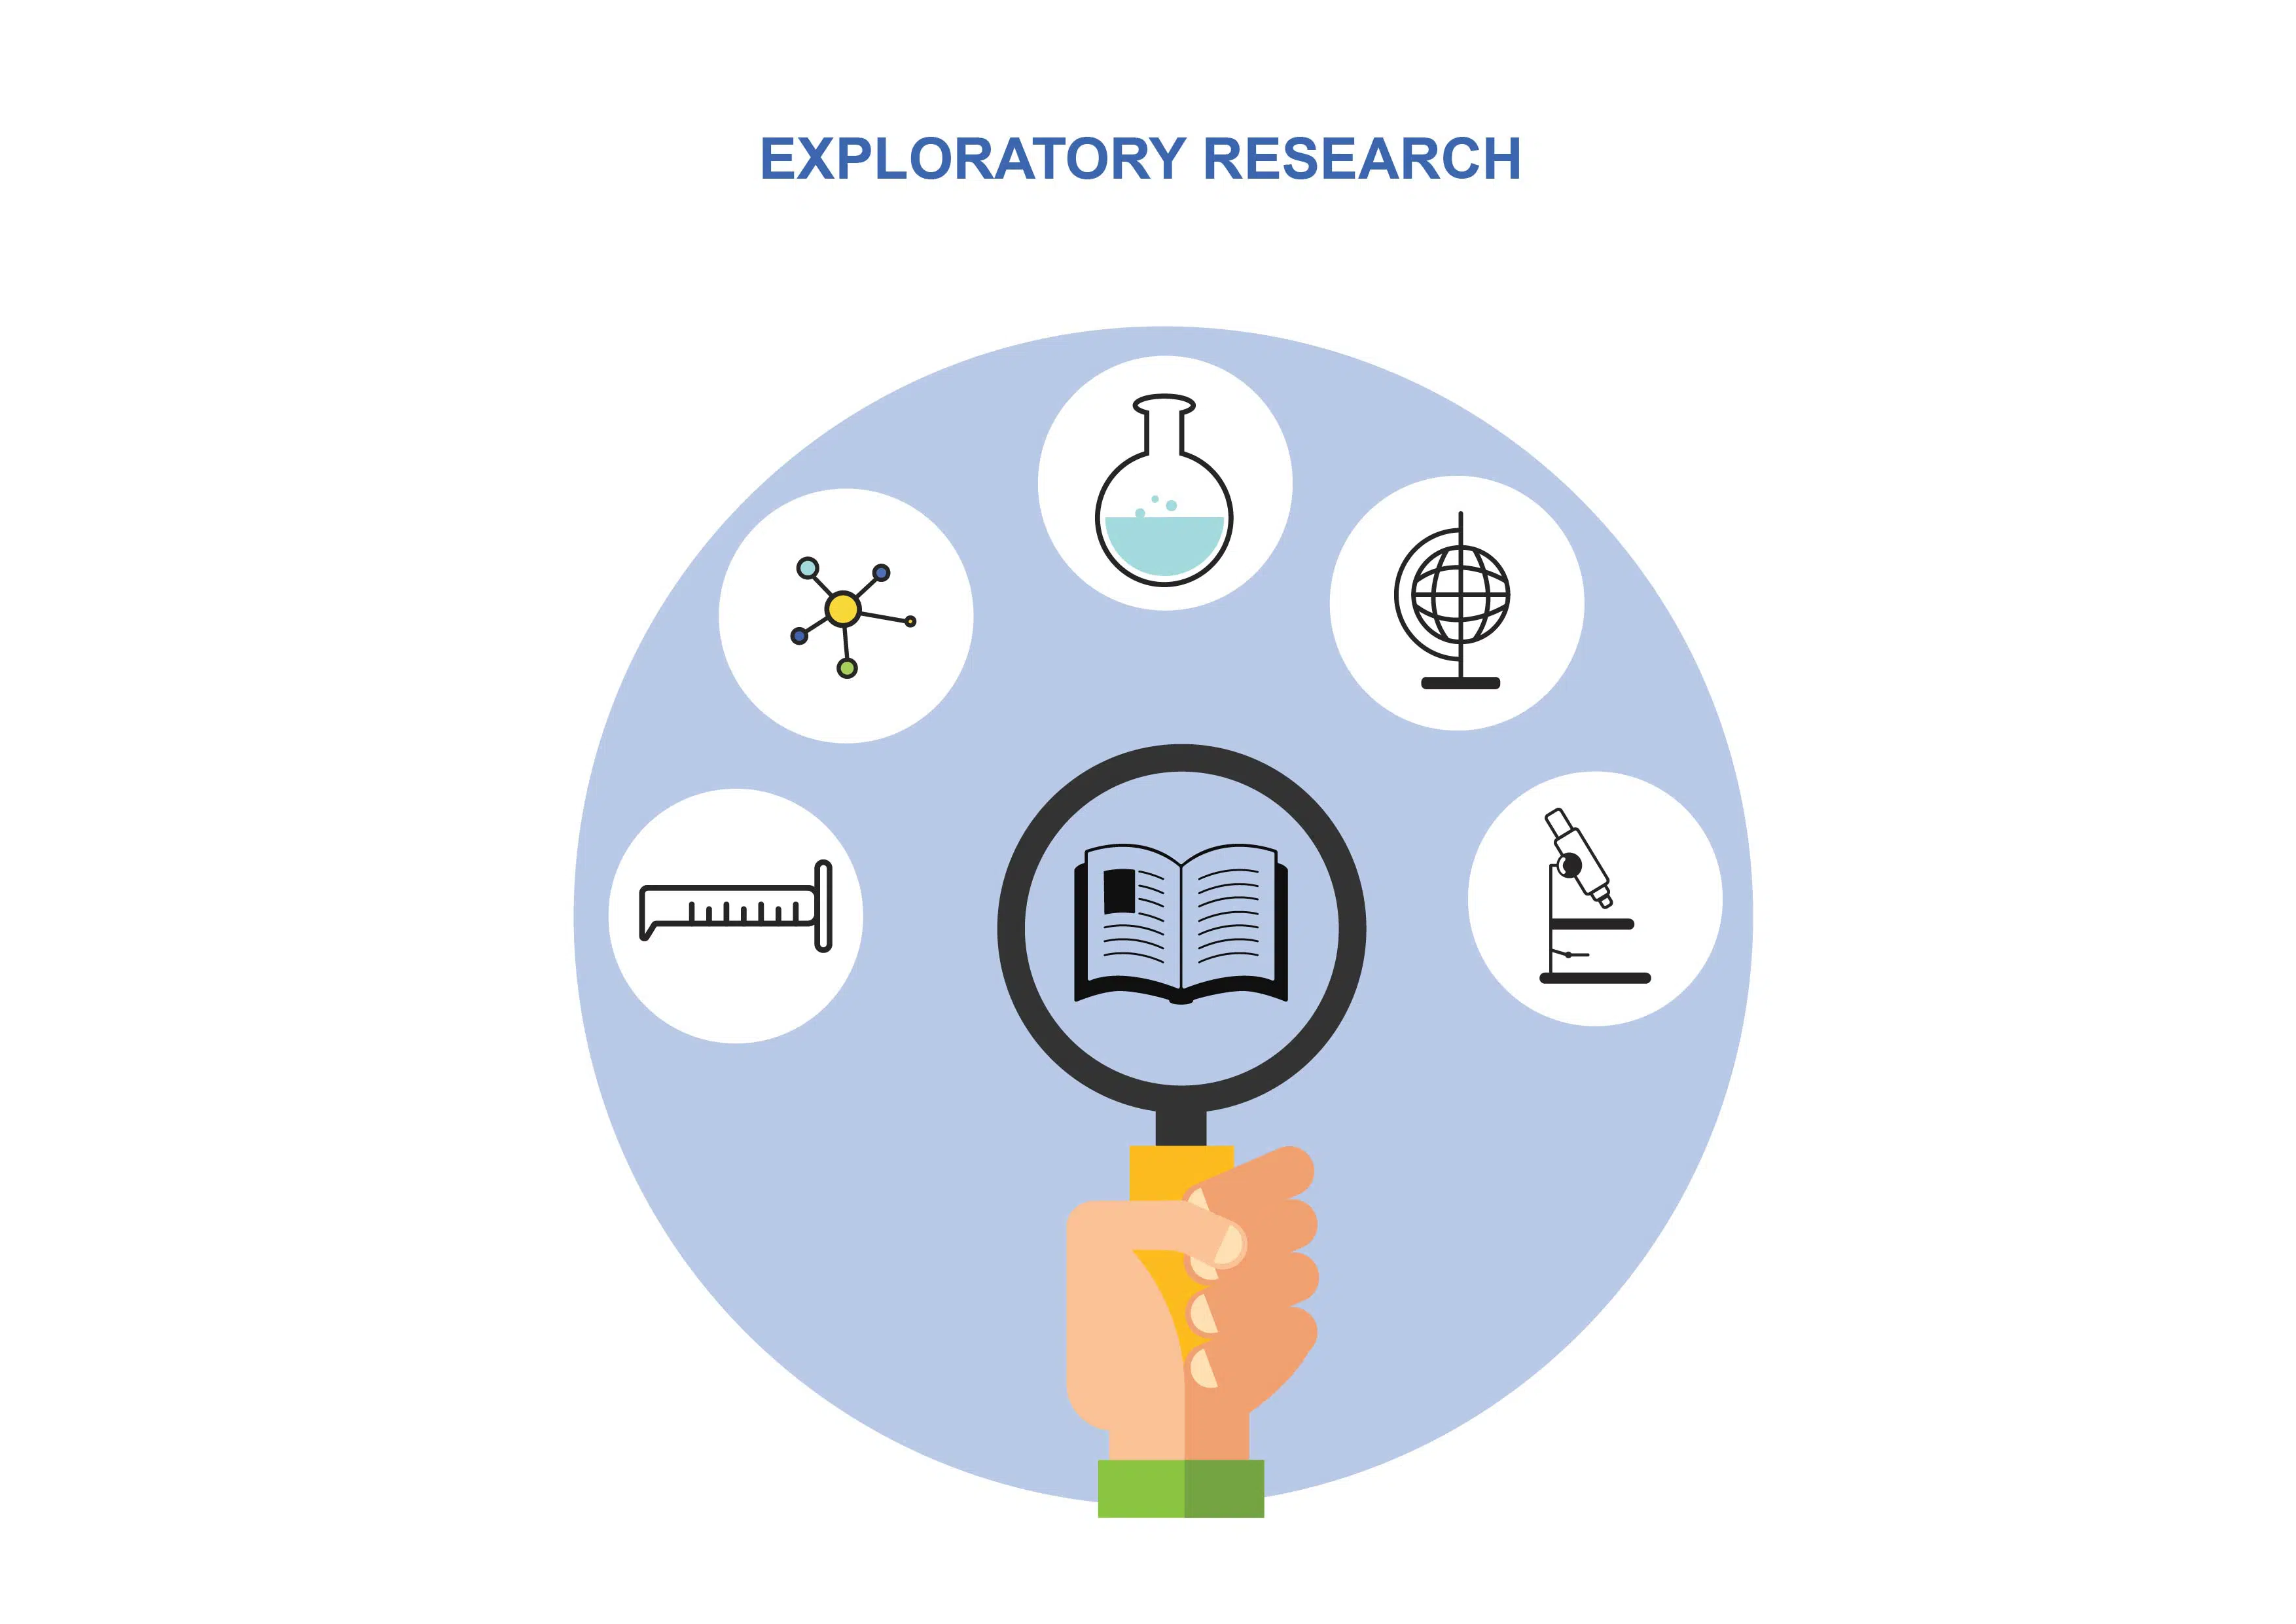 Exploratory Research vs Explanatory Research customer feedback survey